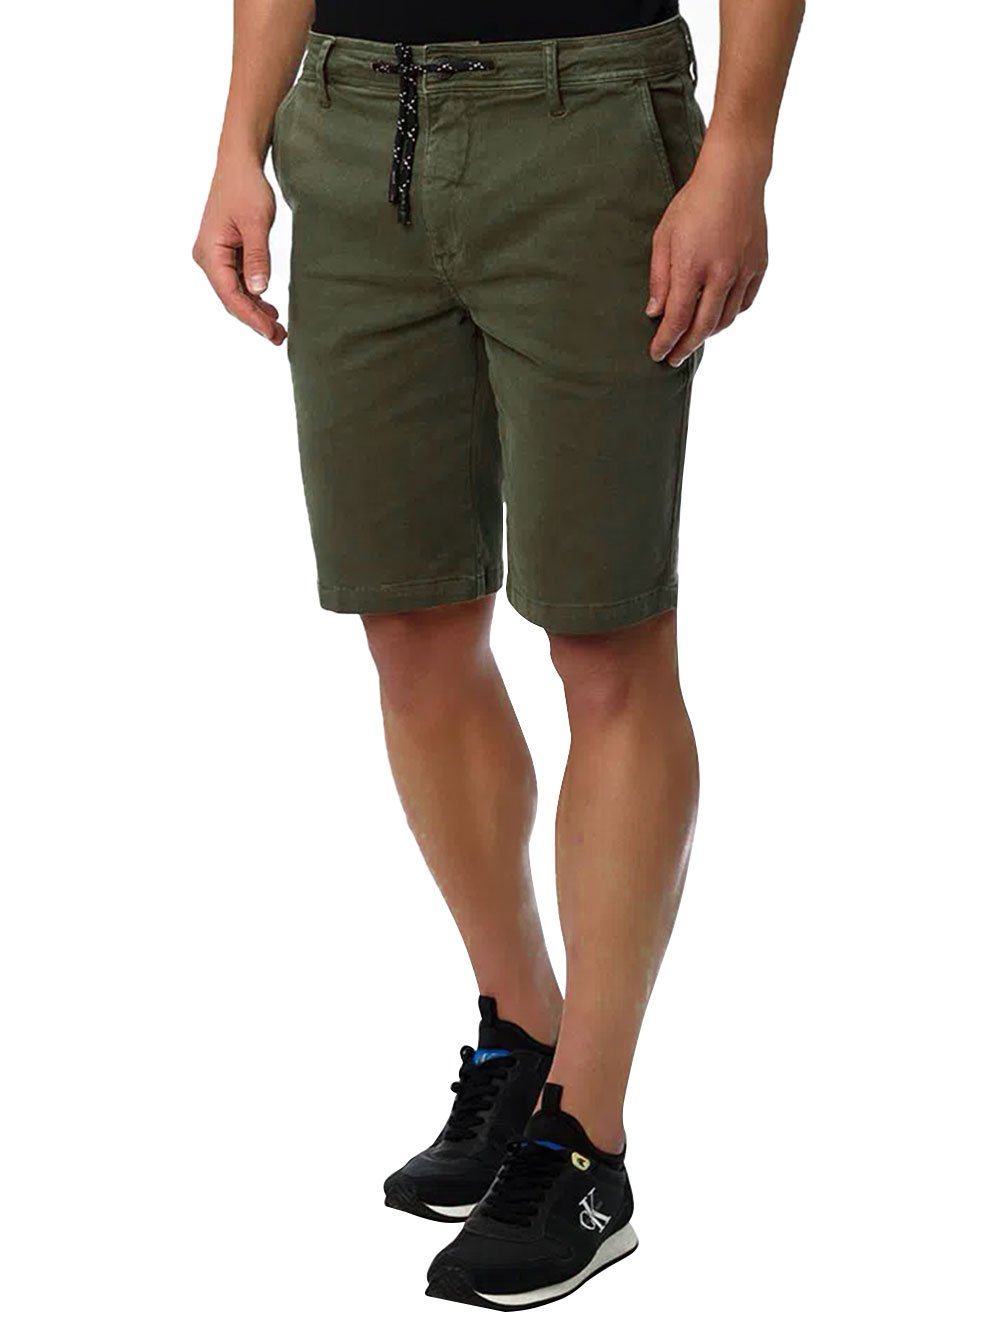 Bermuda Calvin Klein Jeans Masculina Sarja Chino Tinturada Verde Militar